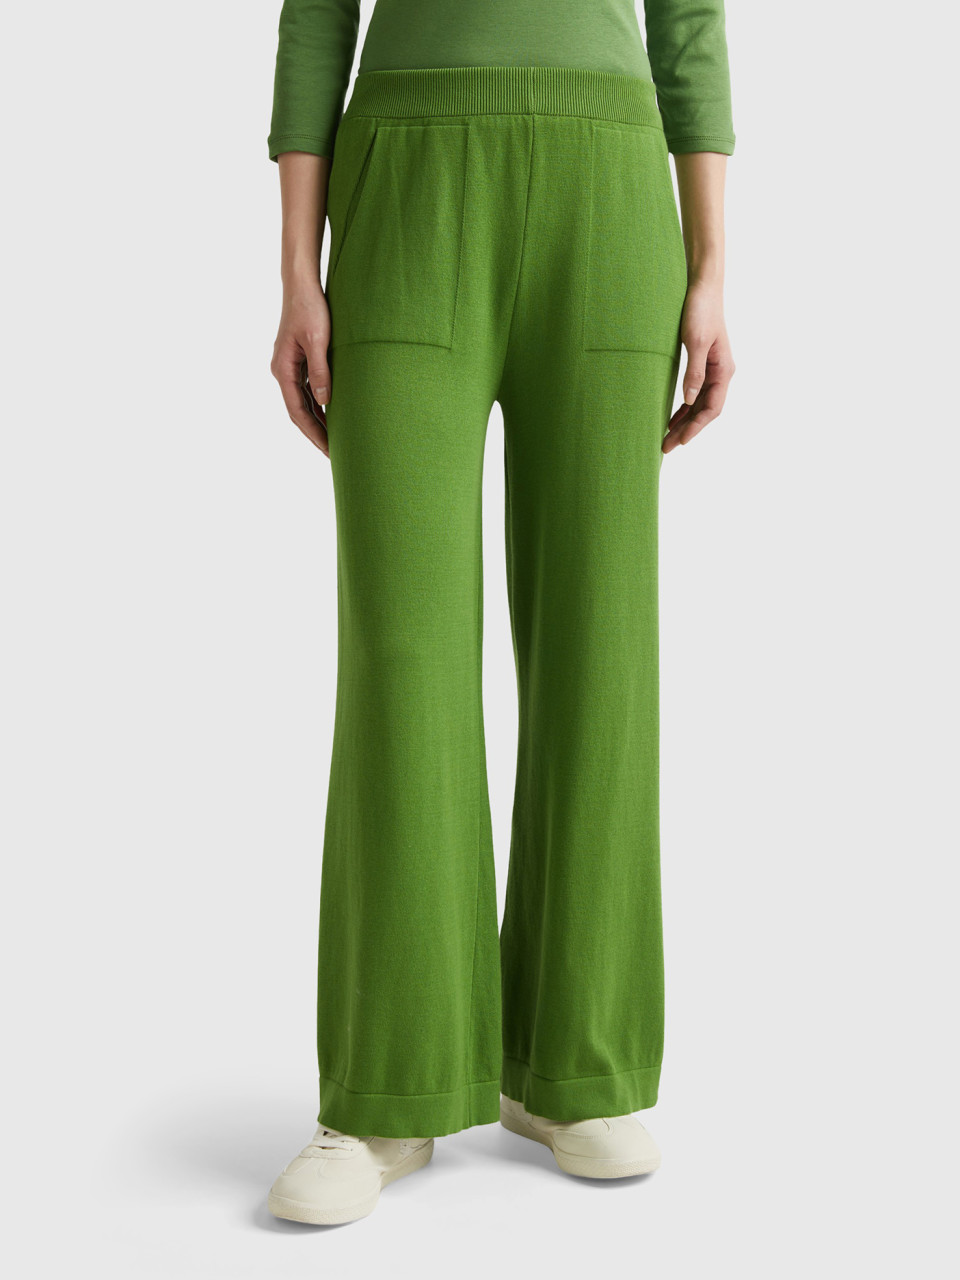 Benetton, Knit Wide Trousers, Military Green, Women